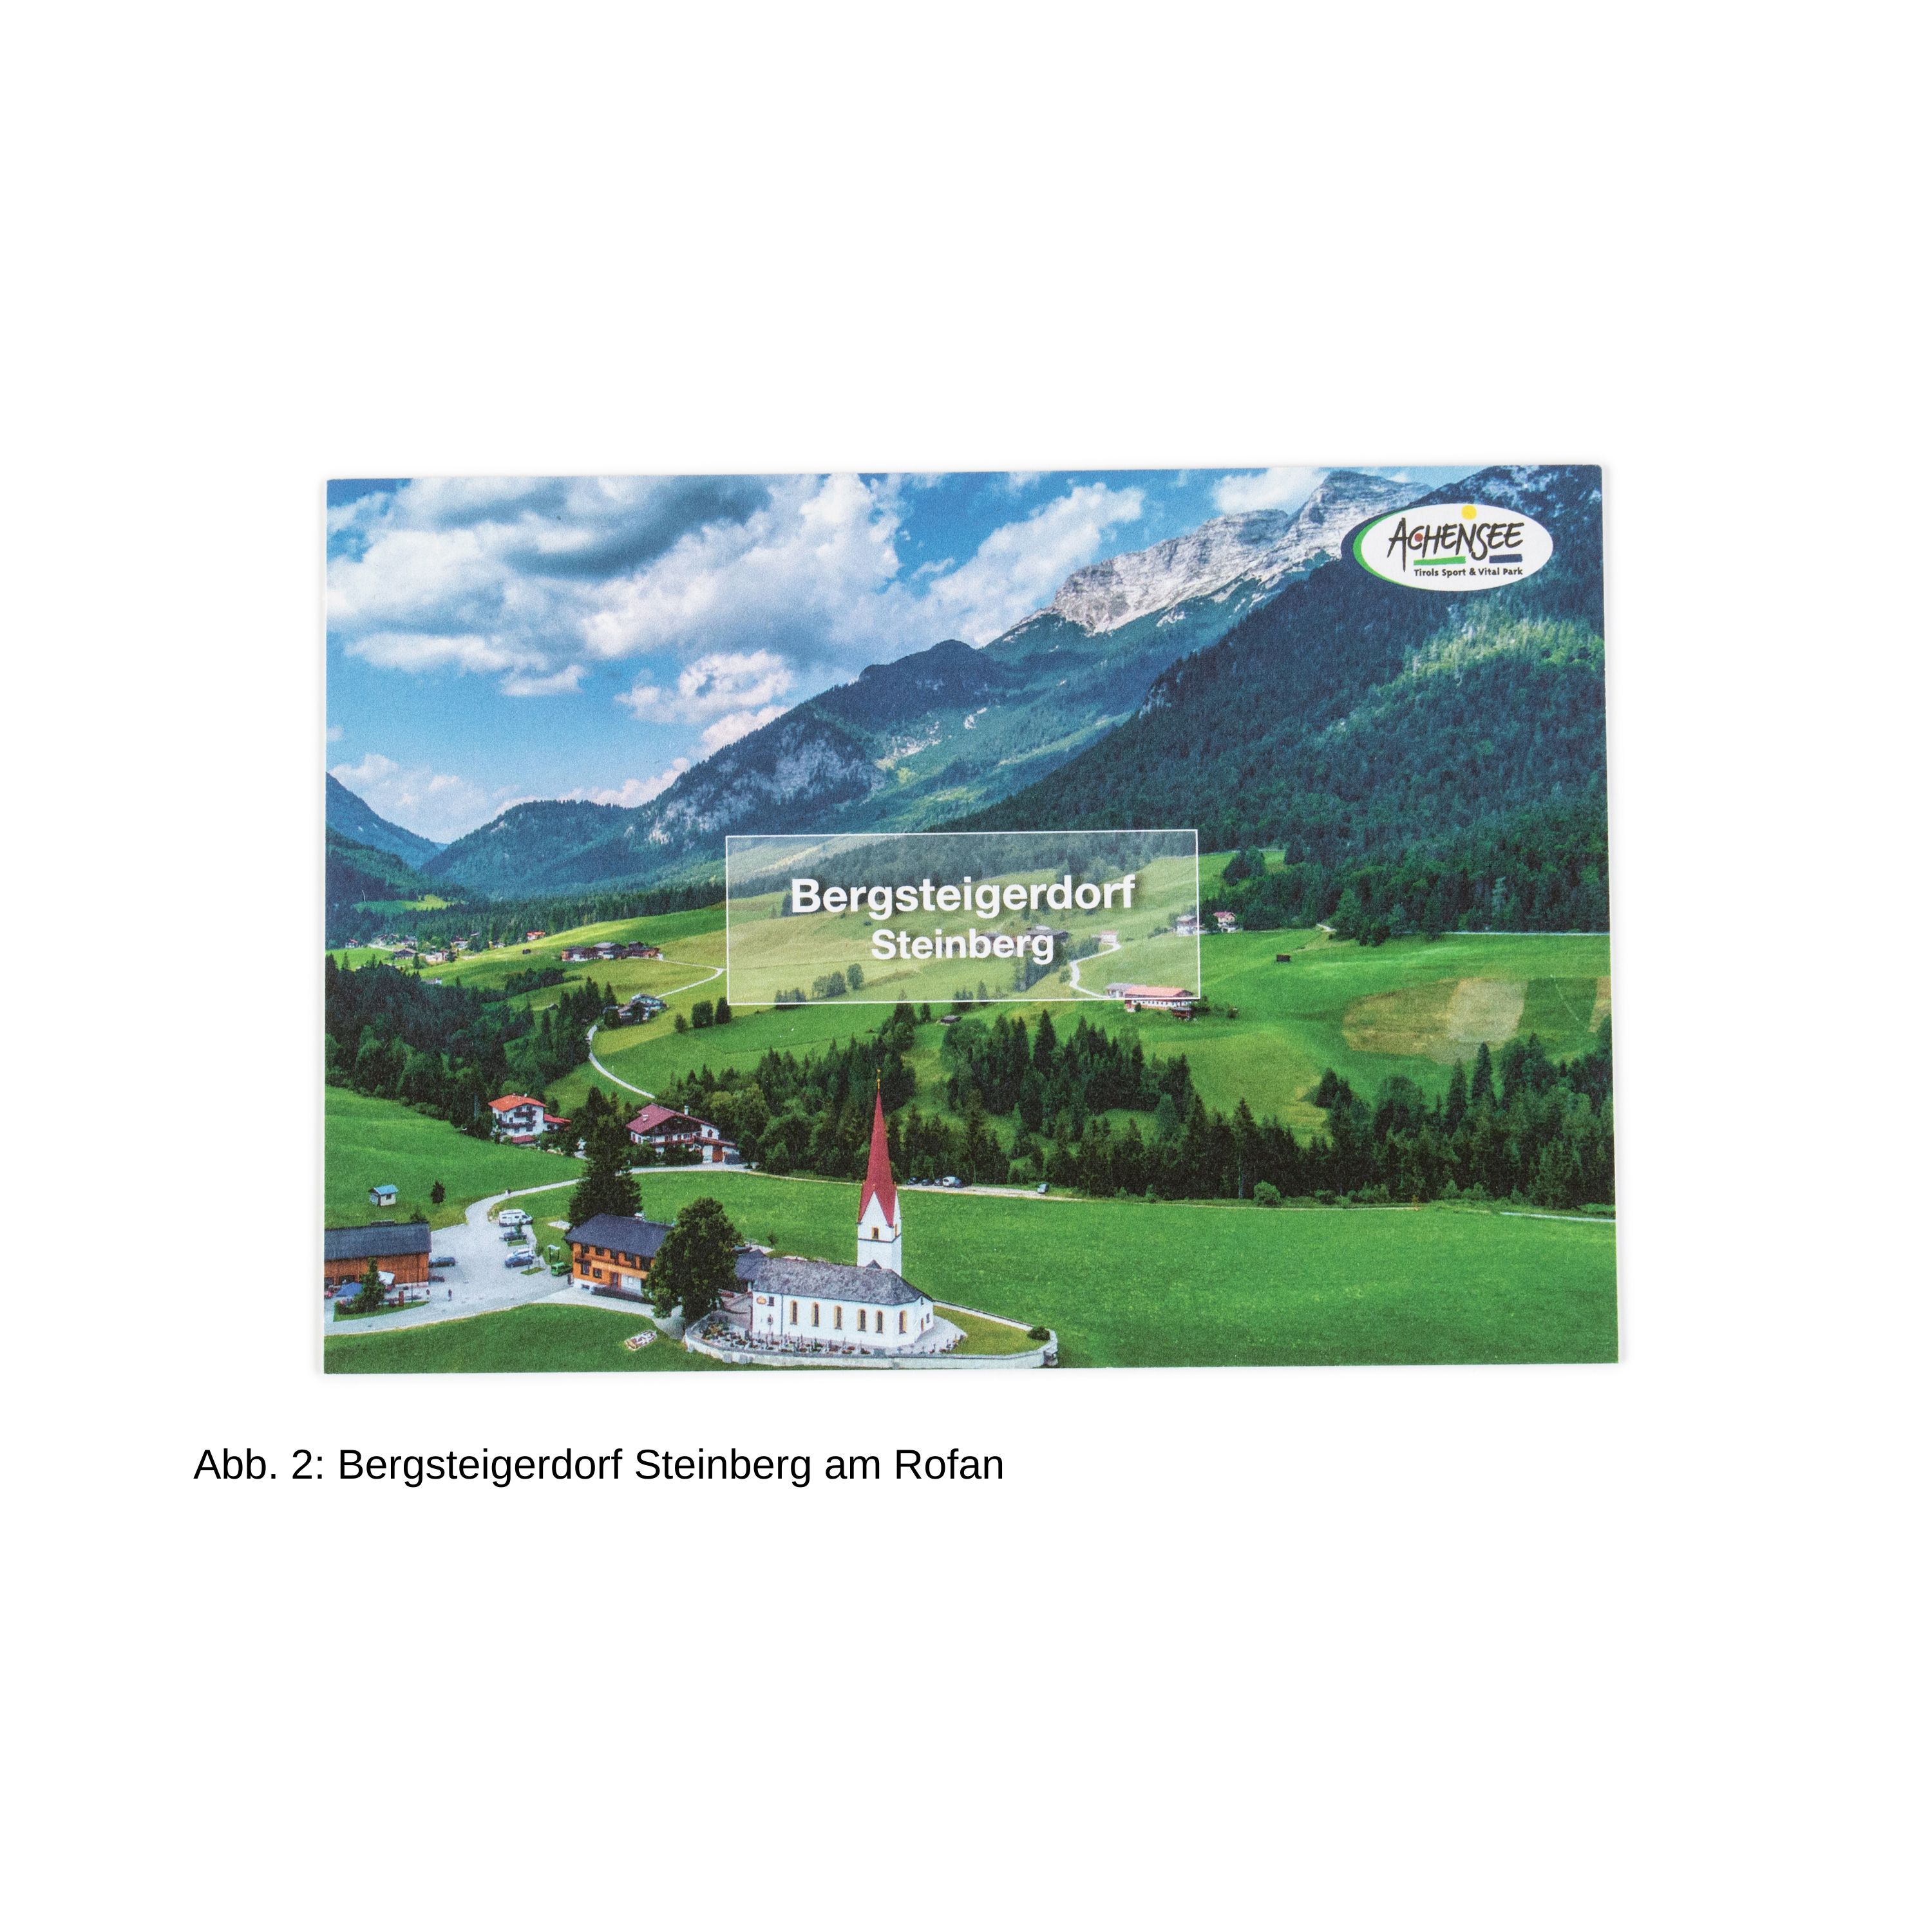 Postkarte des Bergsteigerdorfs Steinberg am Rofan